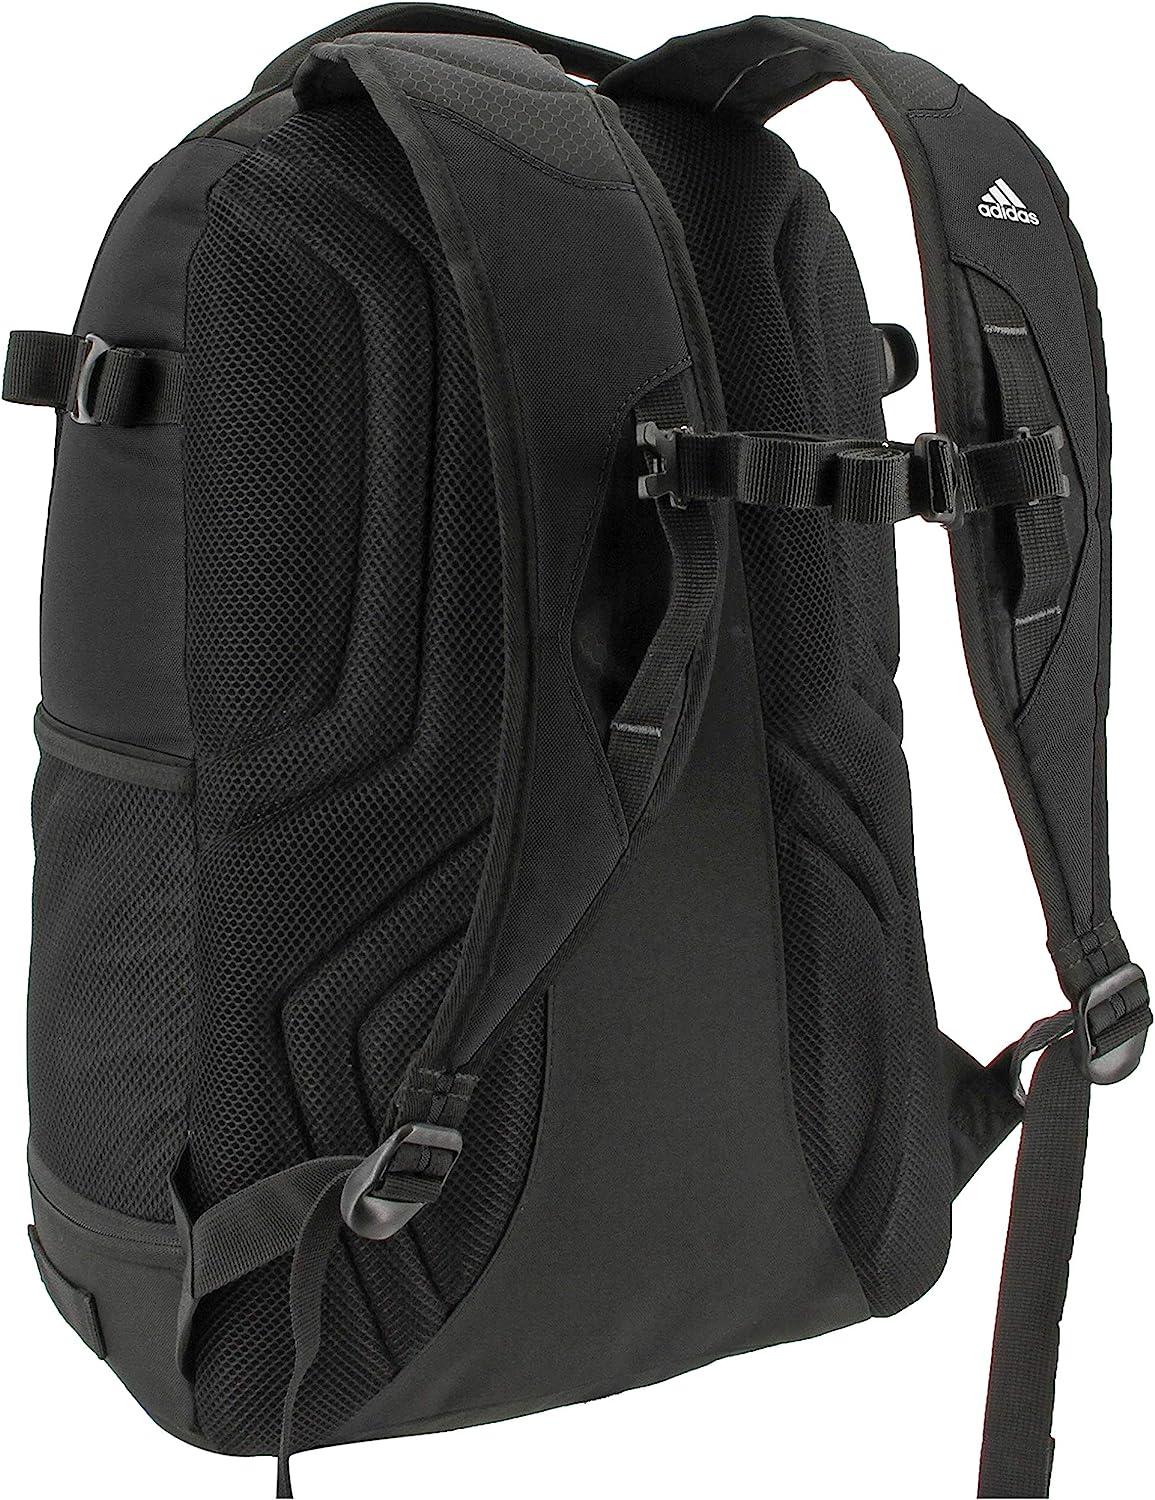 adidas Unisex Utility Team Backpack, Black/Silver, ONE SIZE Black